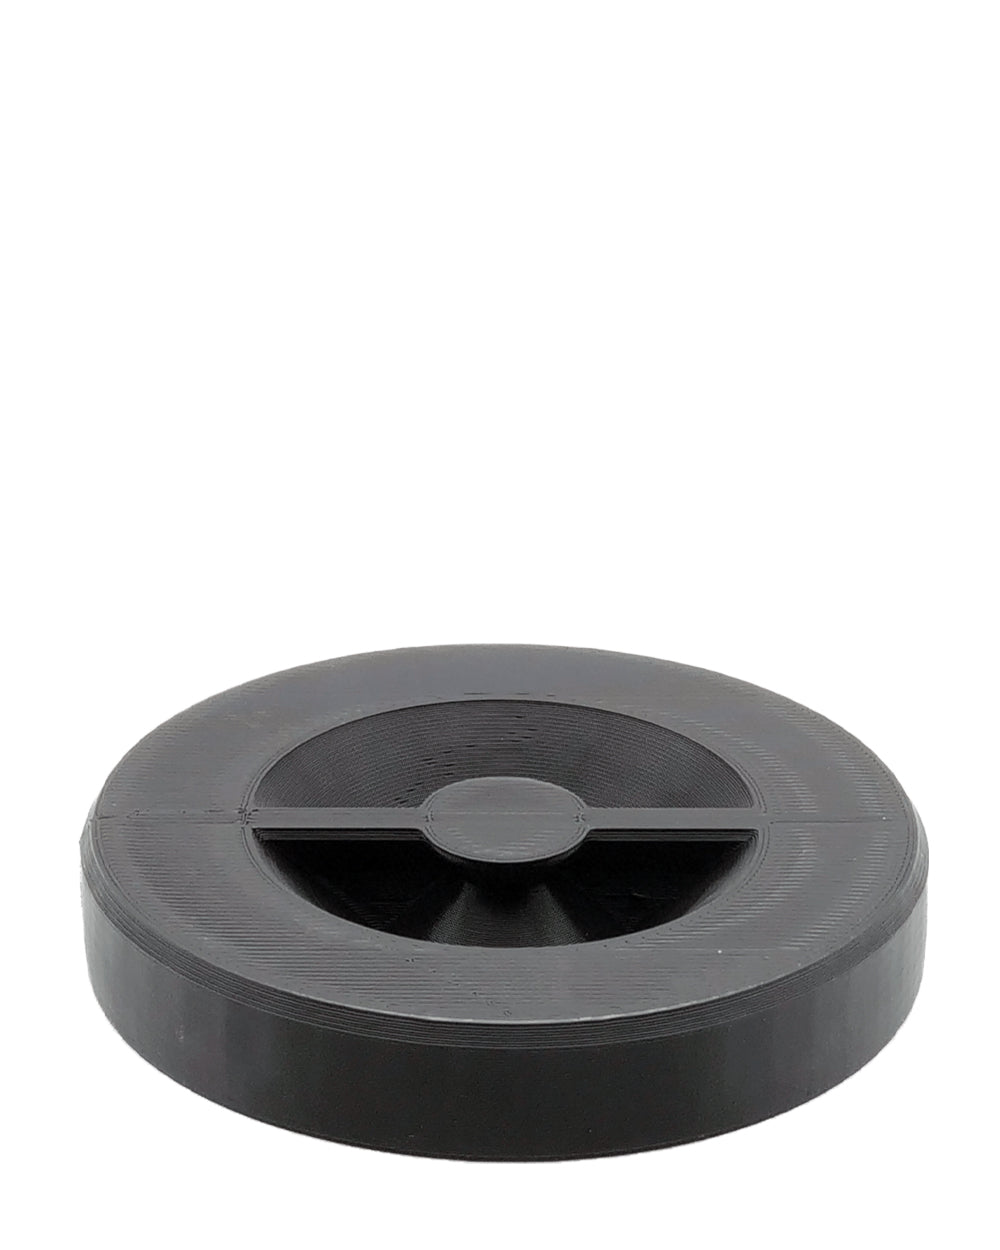 HUMBOLDT | Black Pre-Rolled Cones Filling Machine Starter Kit 109mm | Fill 121 Cones Per Run - 4